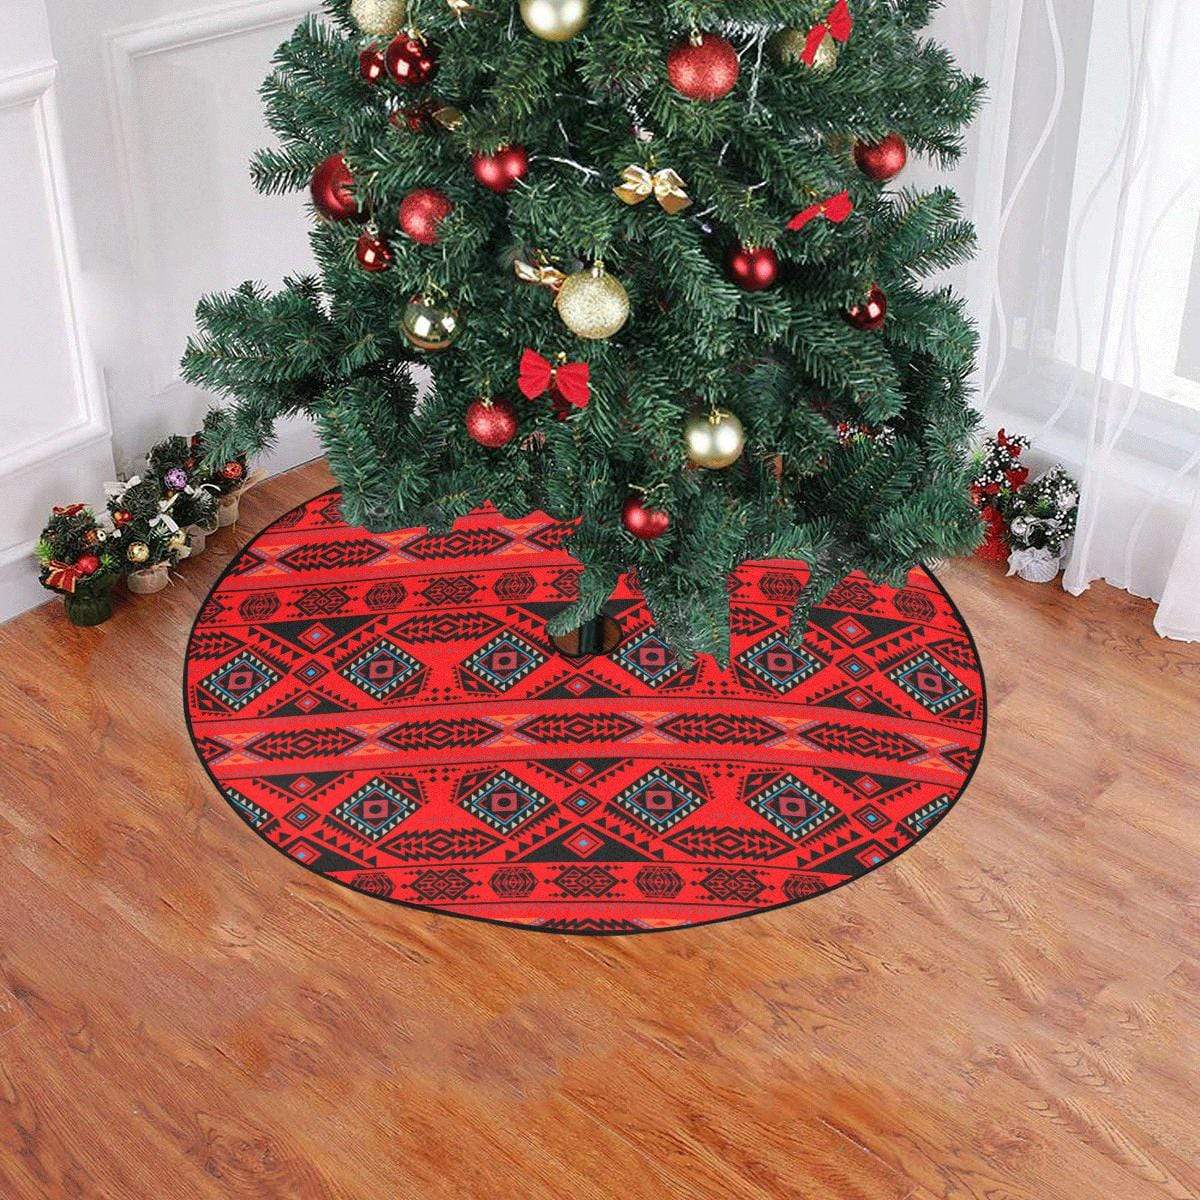 California Coast Mask Christmas Tree Skirt 47" x 47" Christmas Tree Skirt e-joyer 